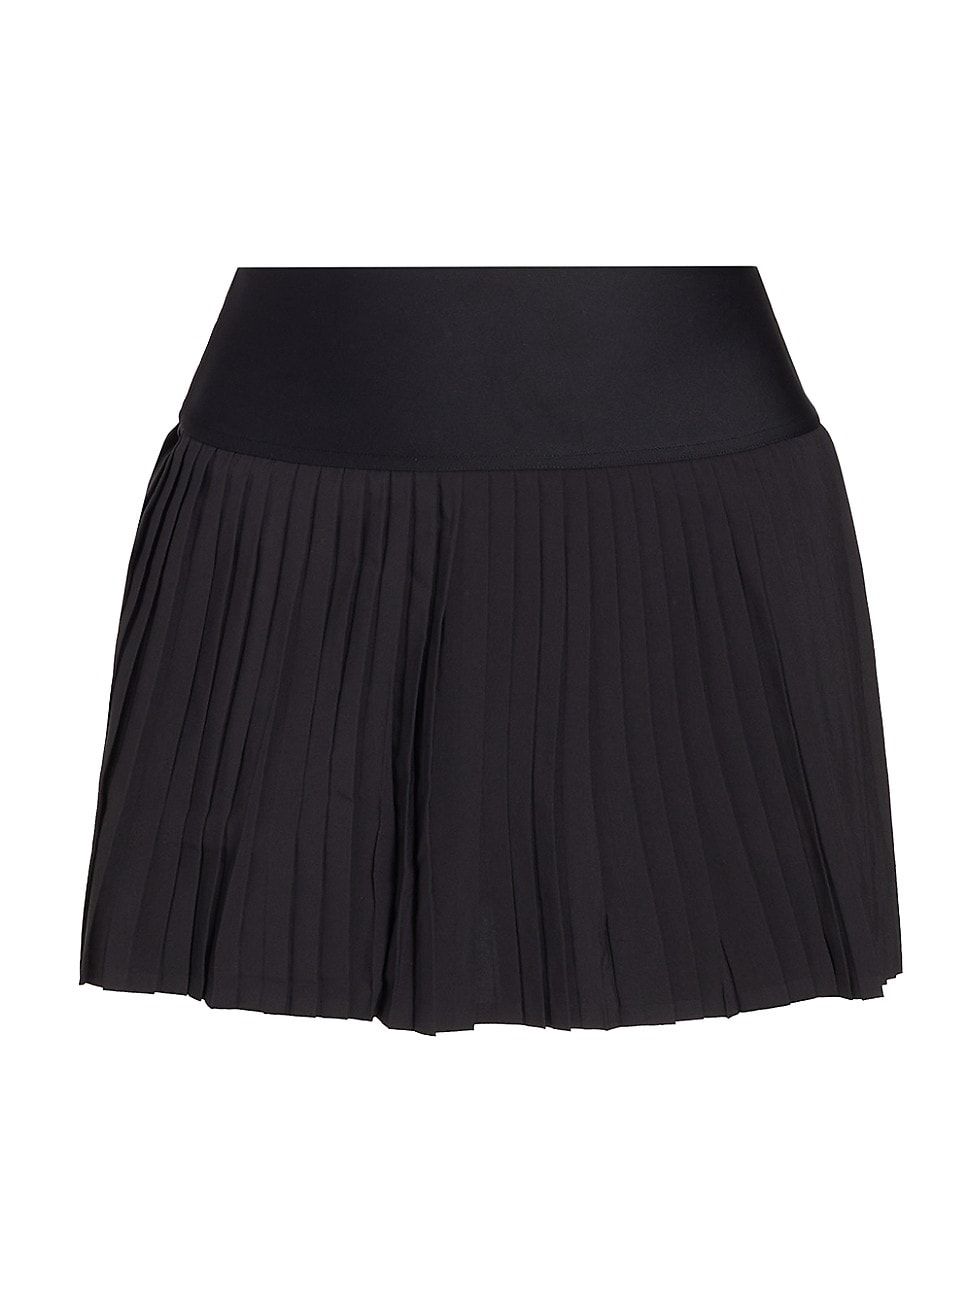 Women's Grand Slam Tennis Skirt - Black - Size Small - Black - Size Small | Saks Fifth Avenue